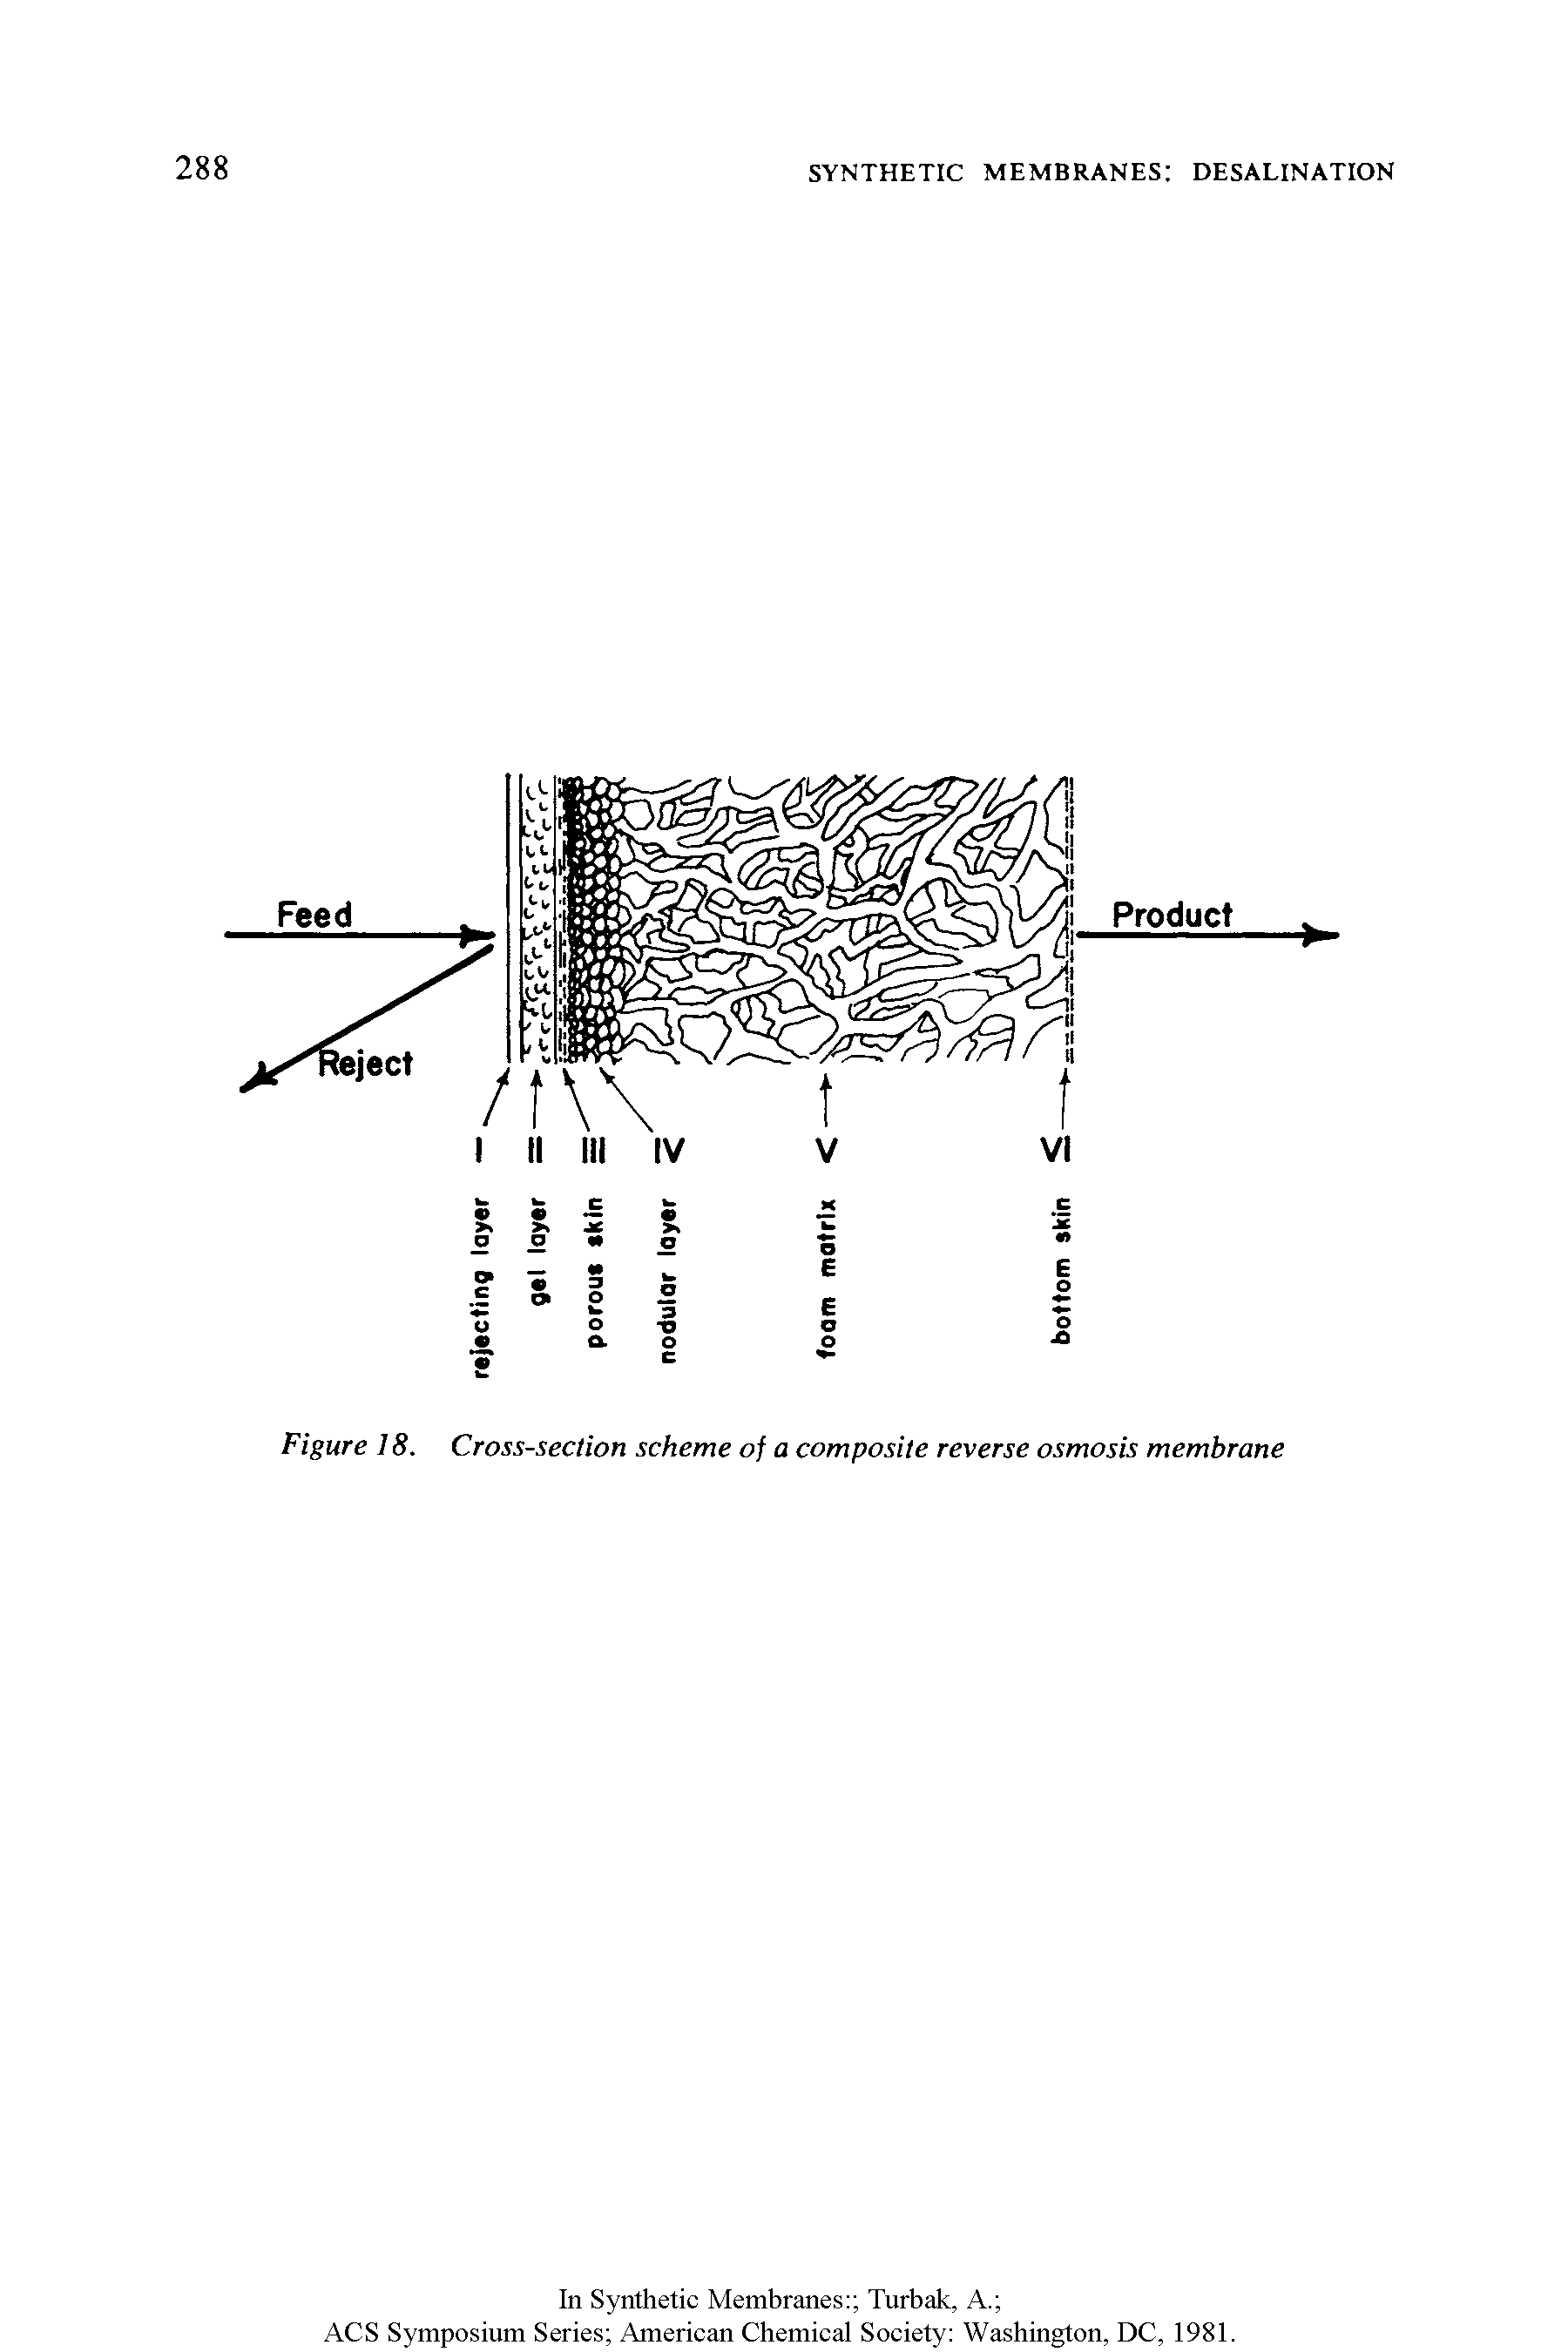 Figure 18. Cross-section scheme of a composite reverse osmosis membrane...